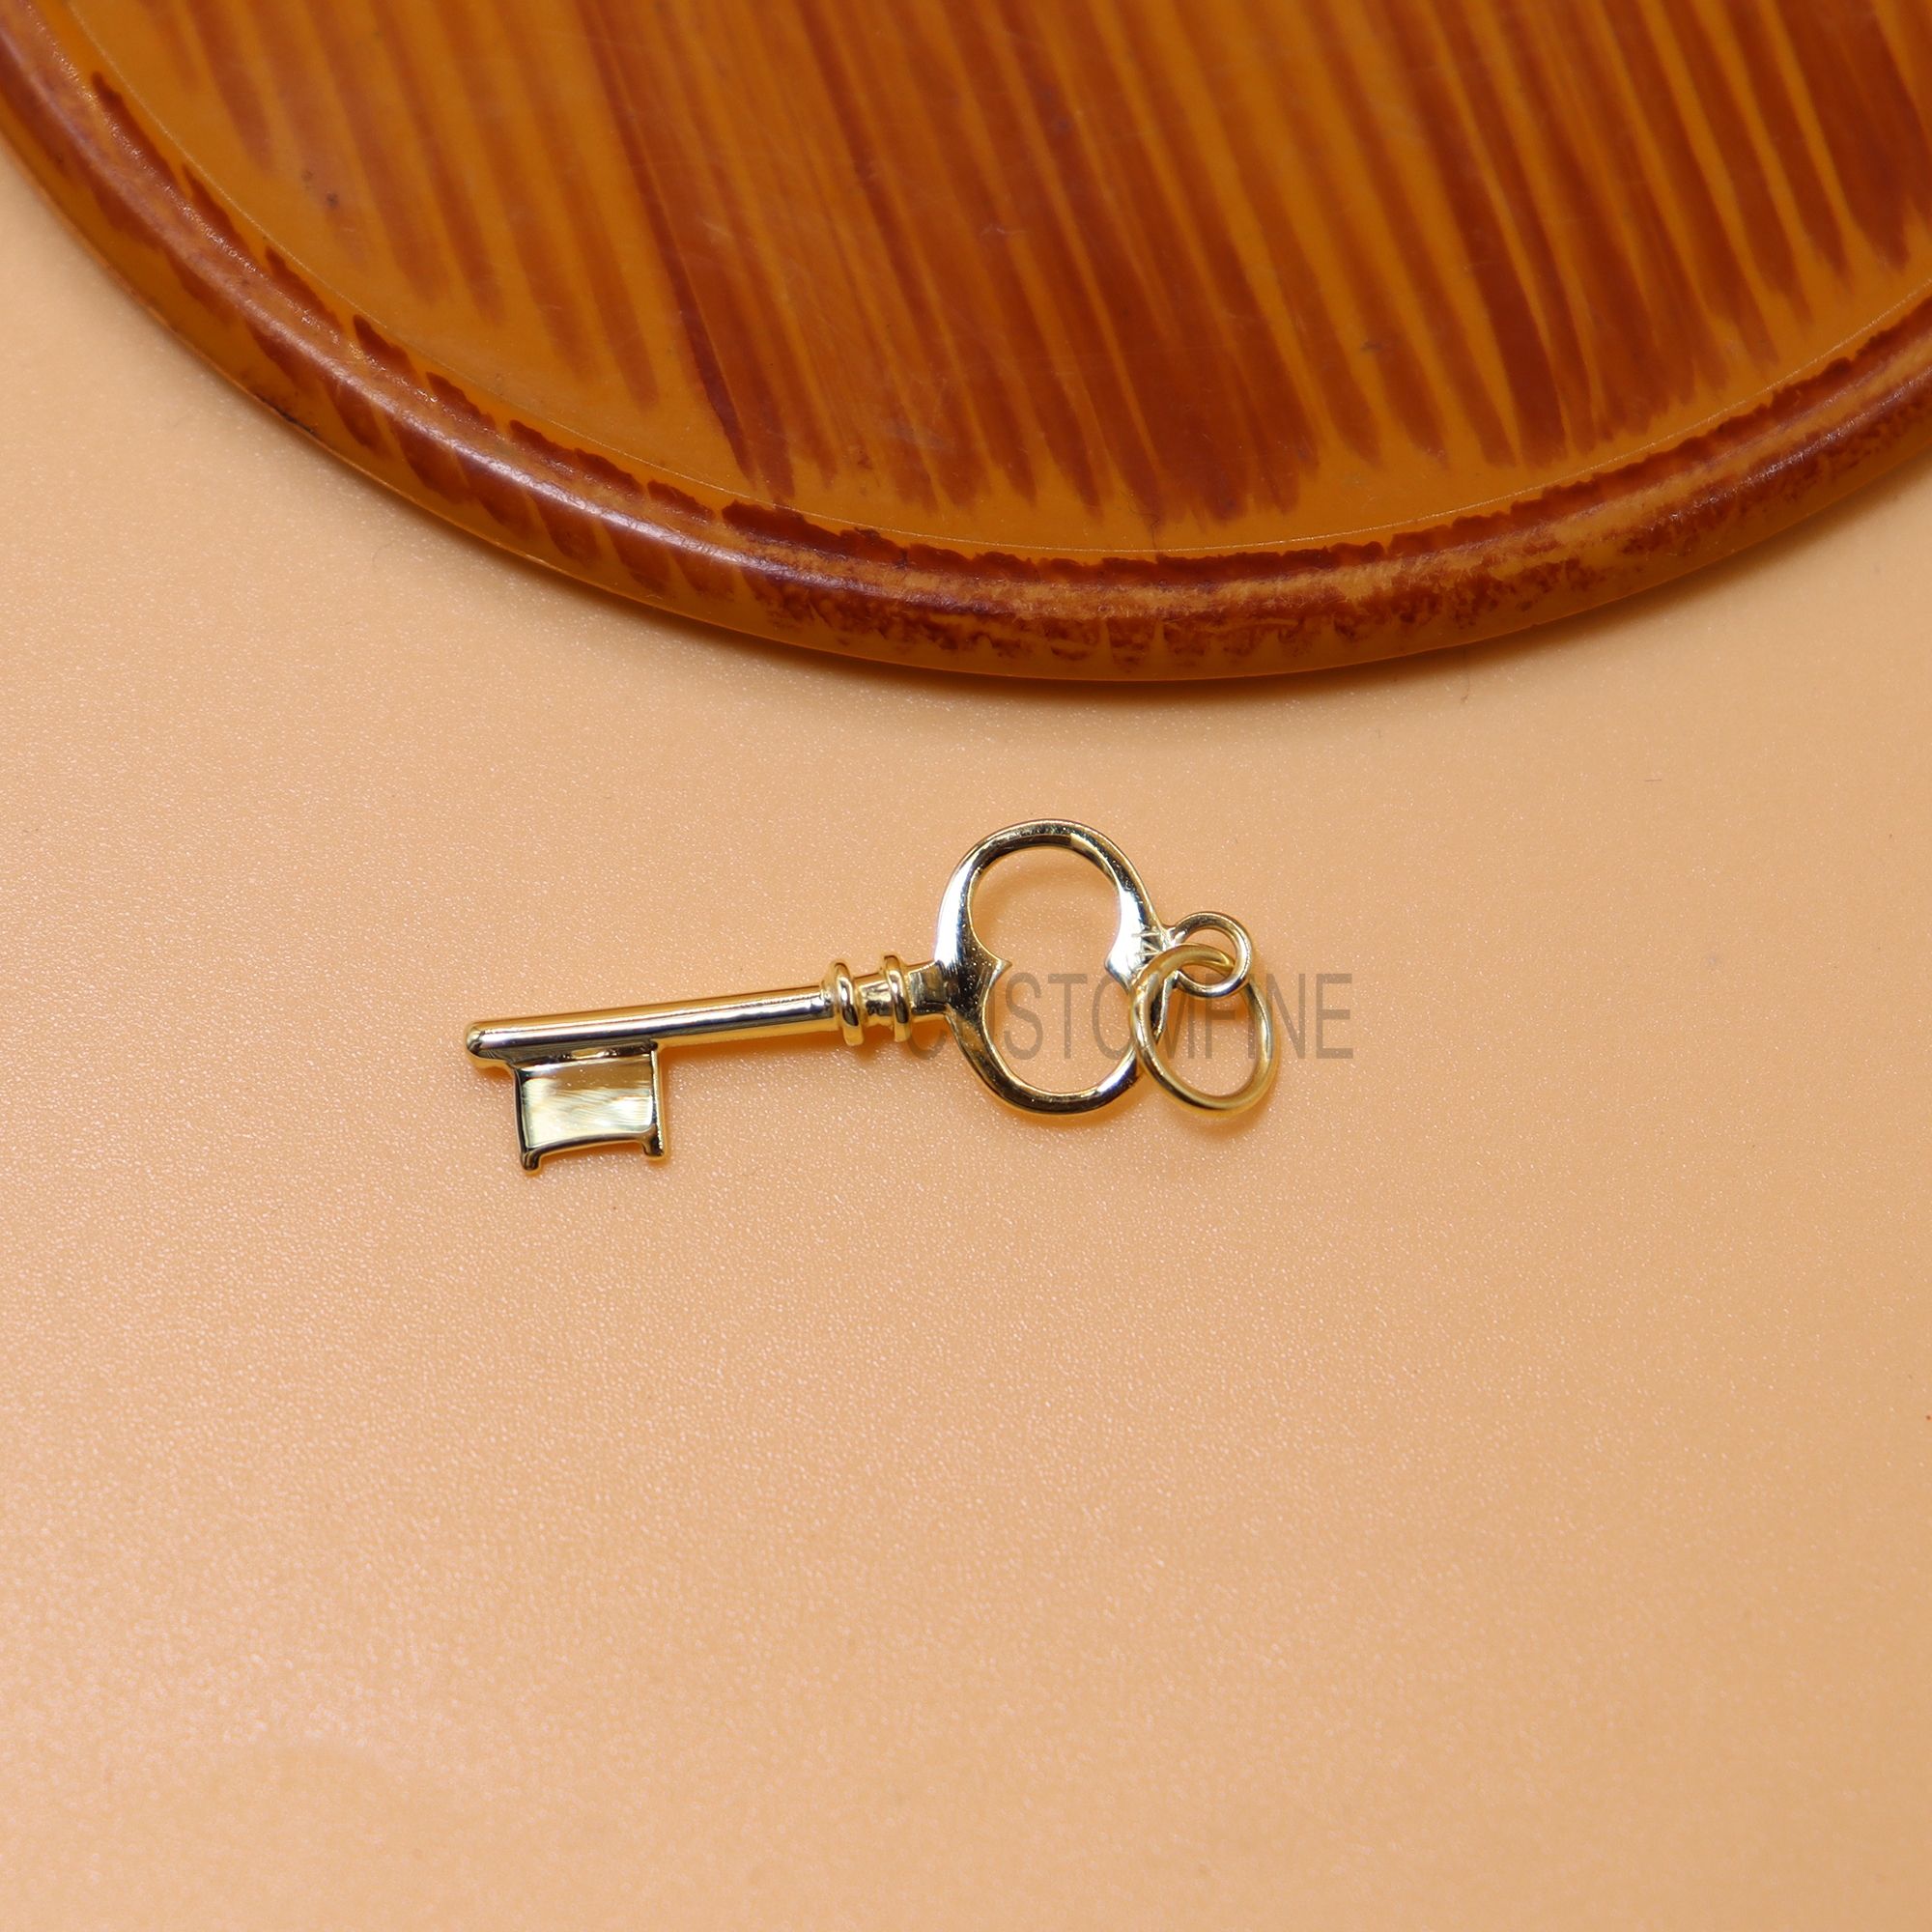 14k Yellow Gold Handmade Key Vintage Charms Pendant, 14k Key Charms, 14k Gold Key Charms Jewelry